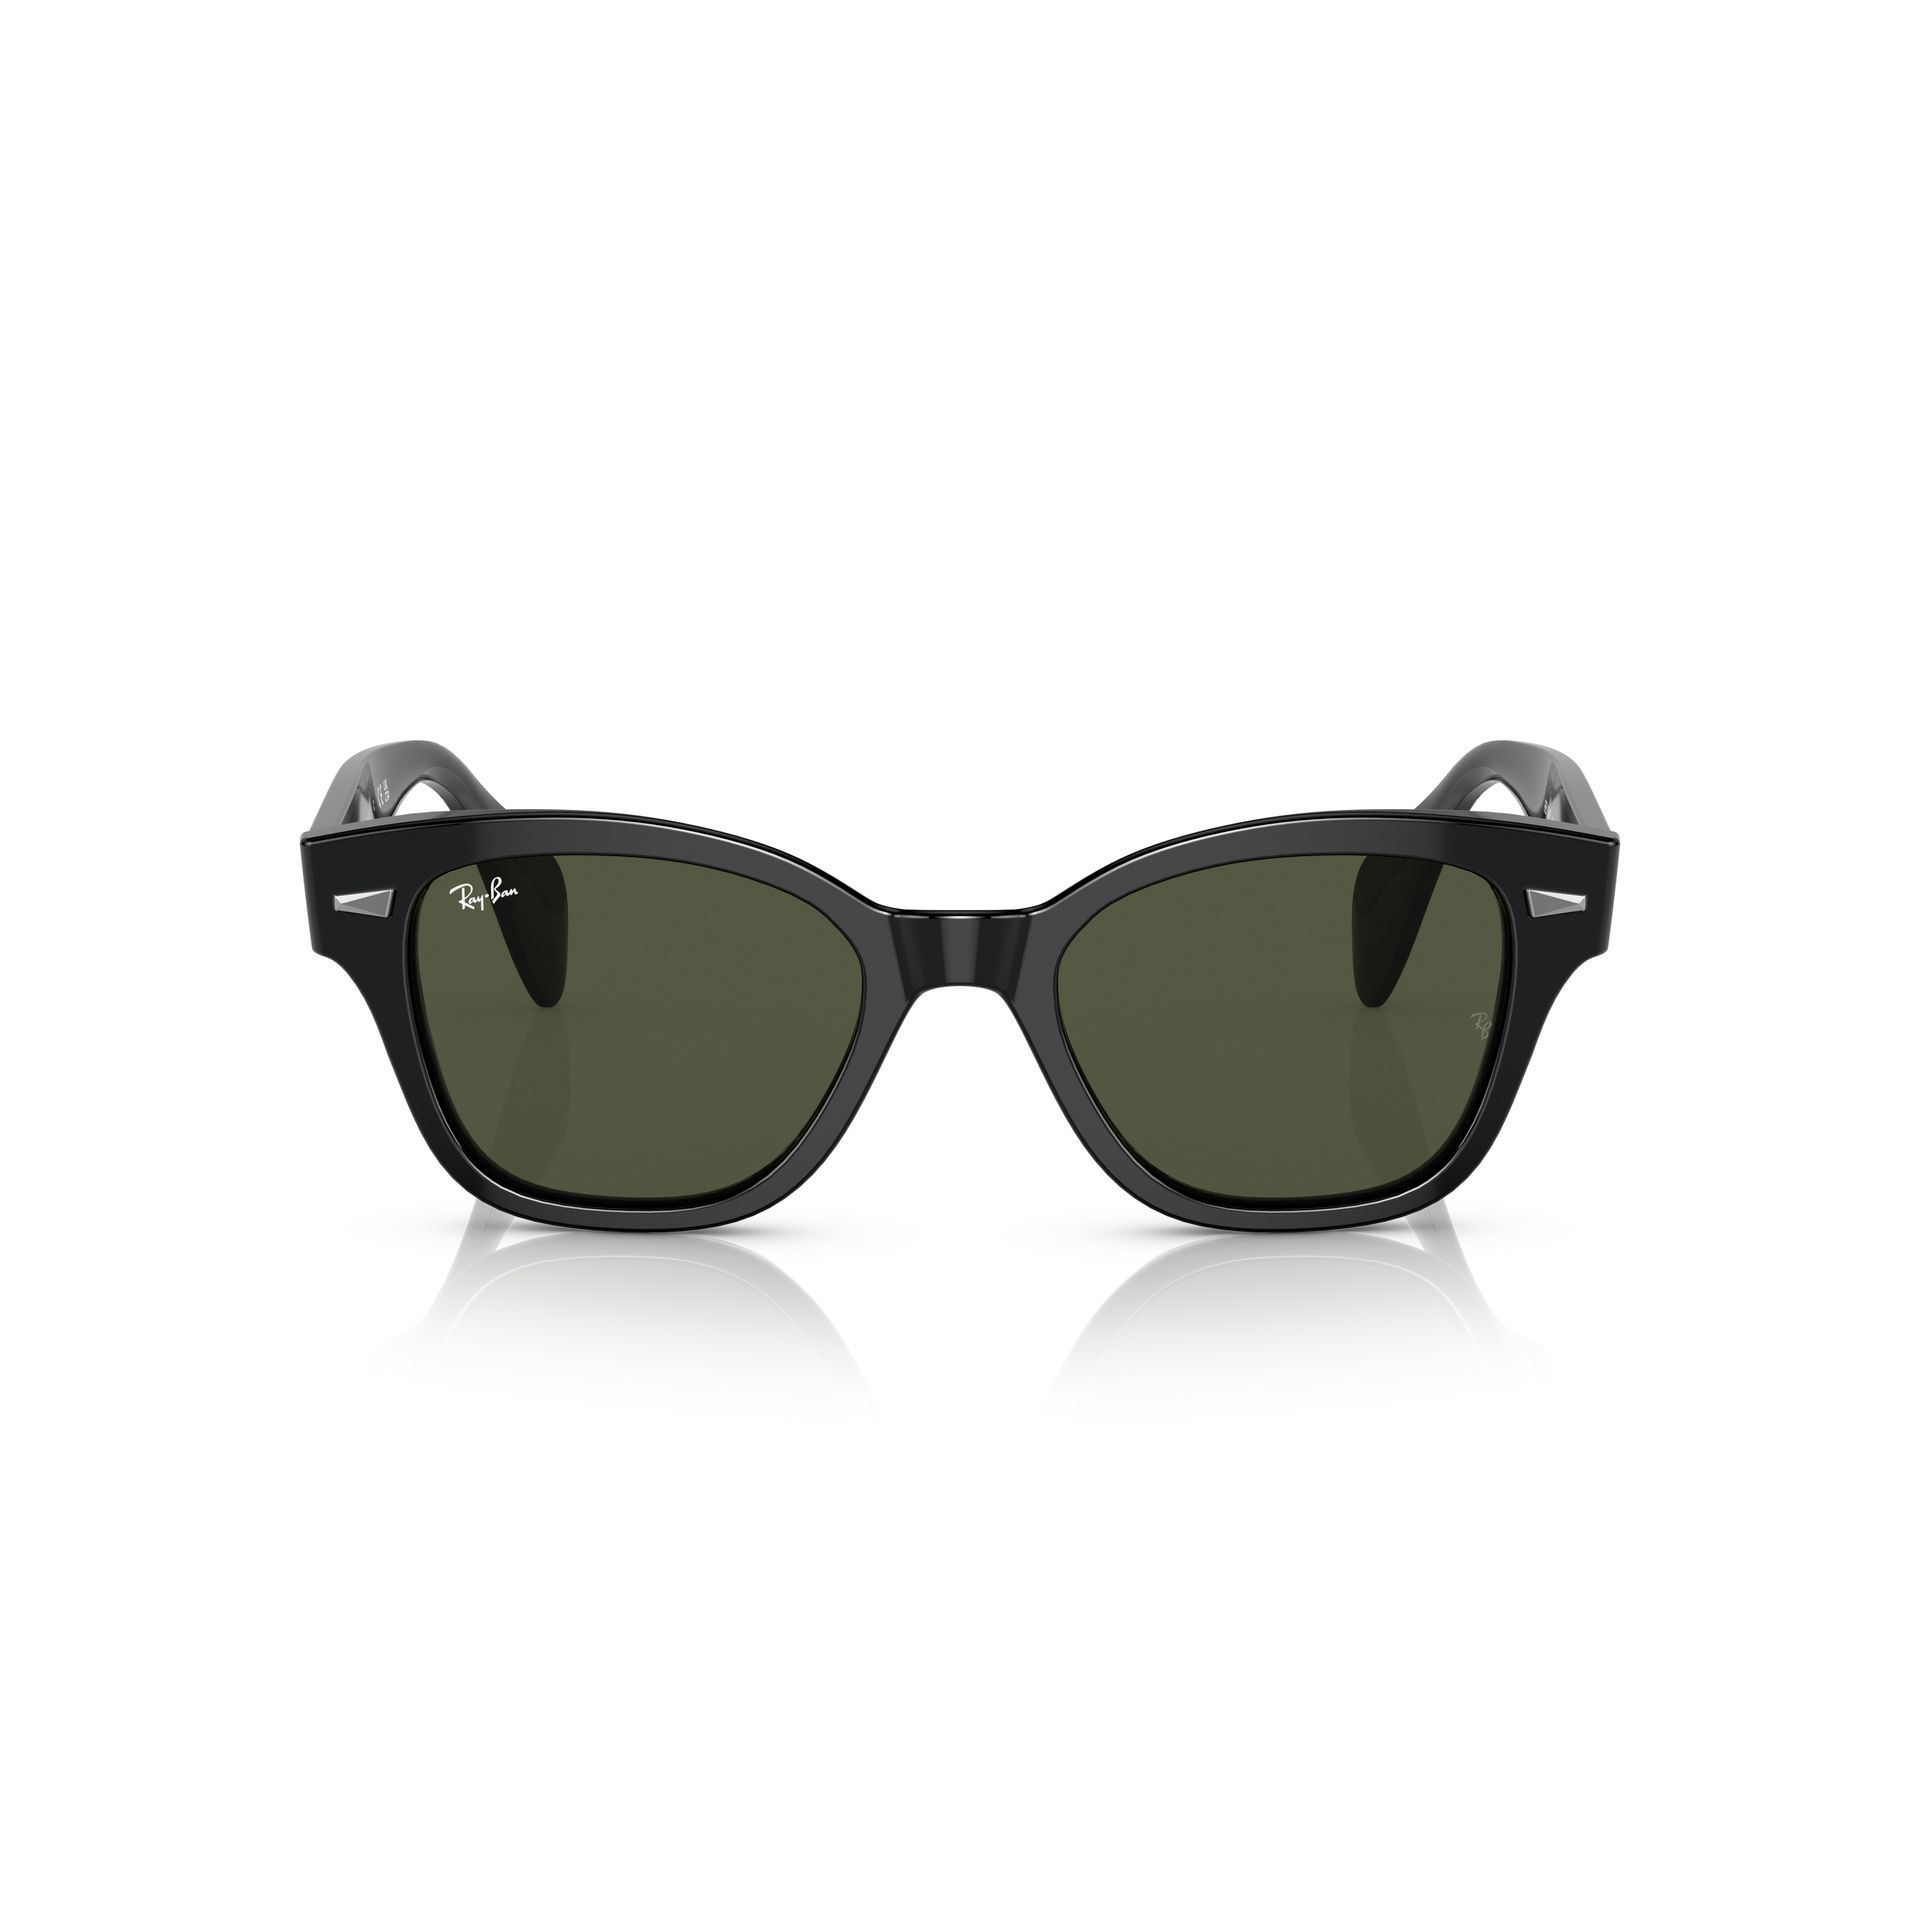 0RB0880S Square Sunglasses 901 31 - size 49